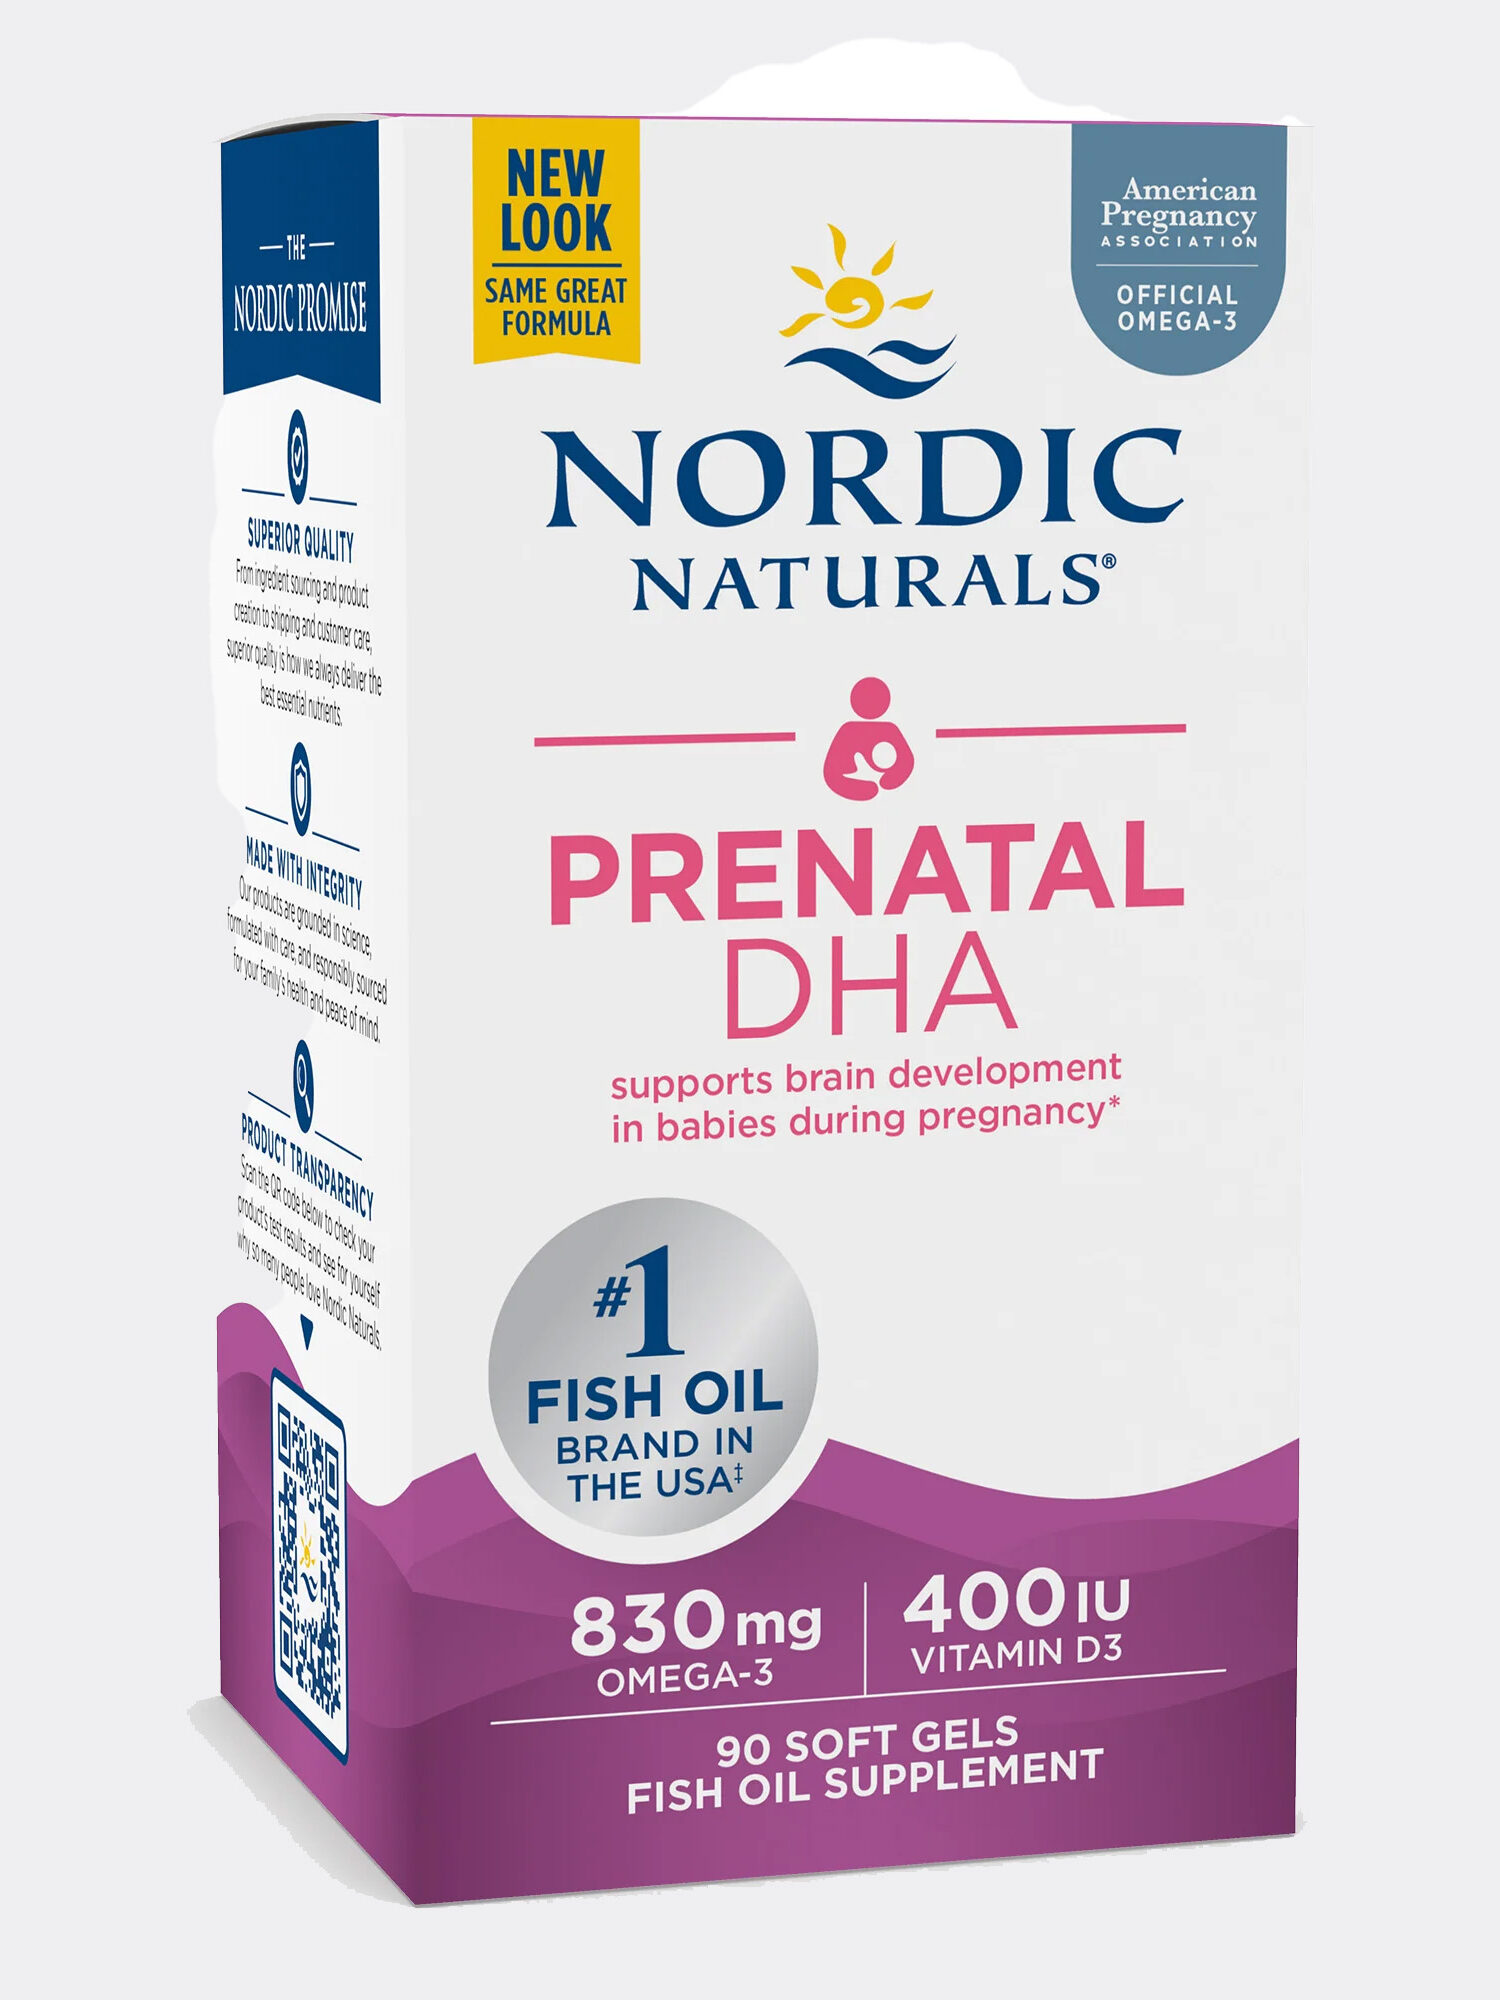 Hormone supplements from Nordic Naturals